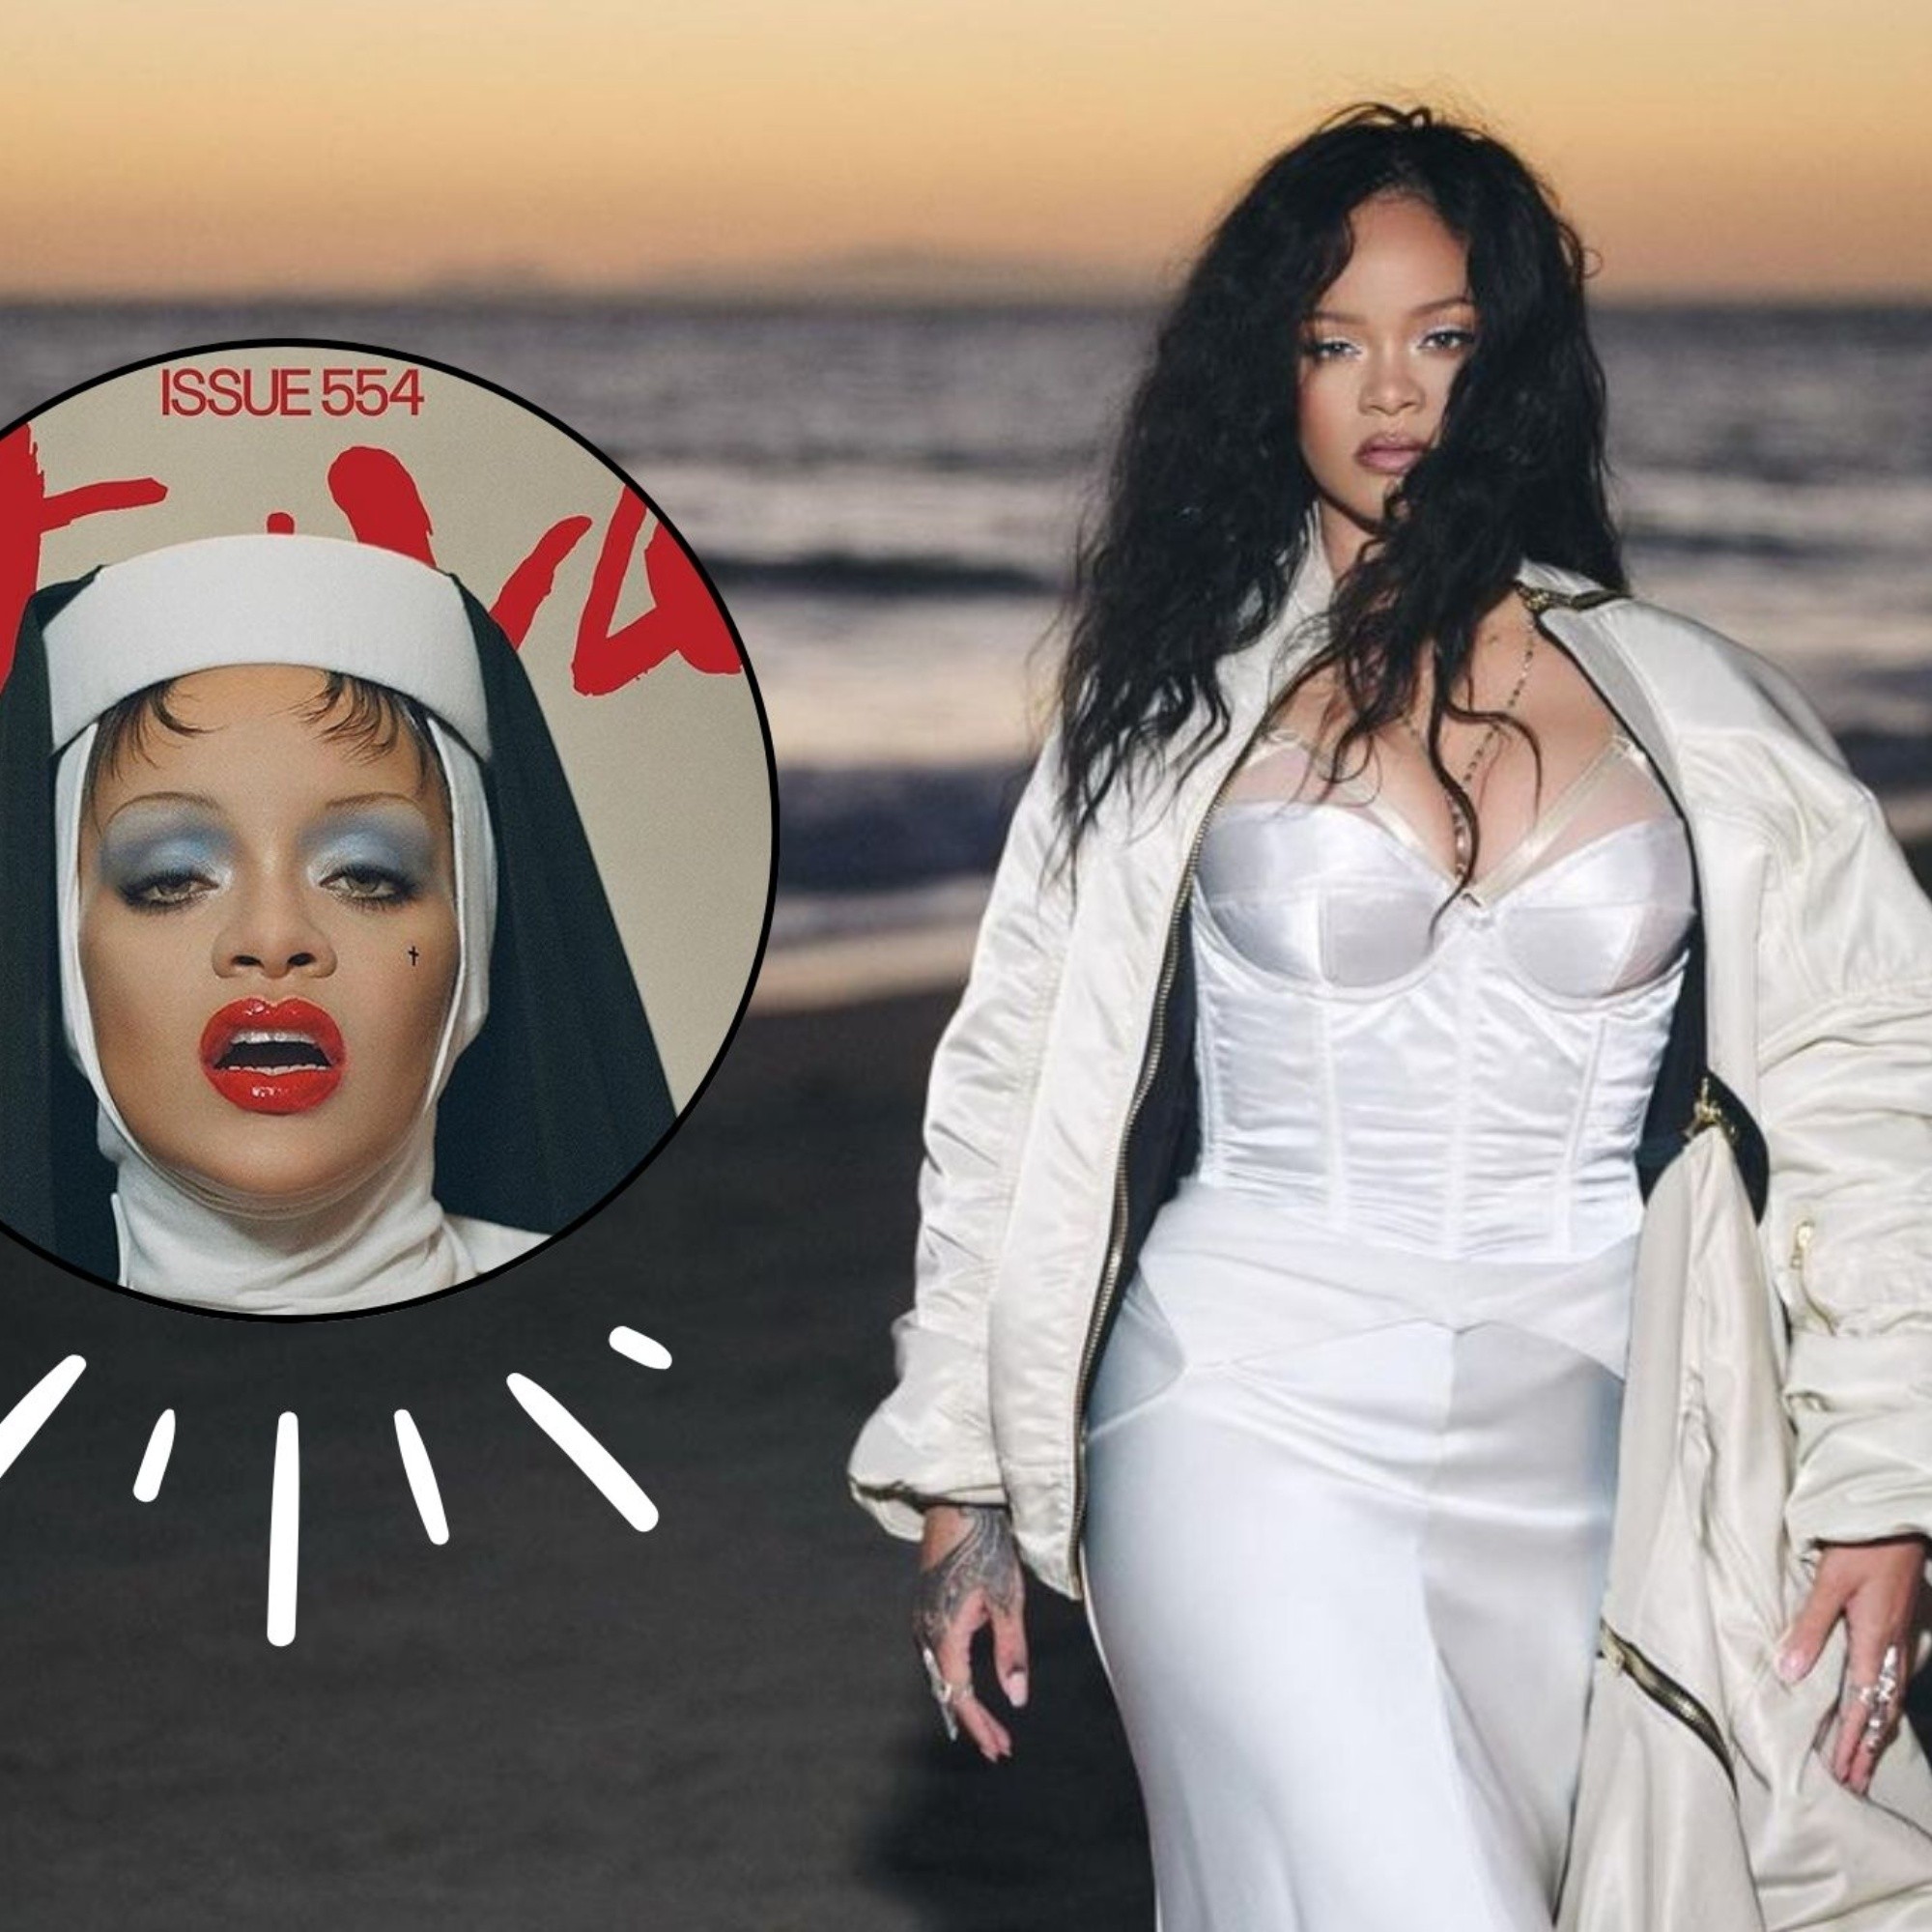 Rihanna desata polémica al vestirse de "monja", ¿falta de respeto? | DIVERSO Lifestyle